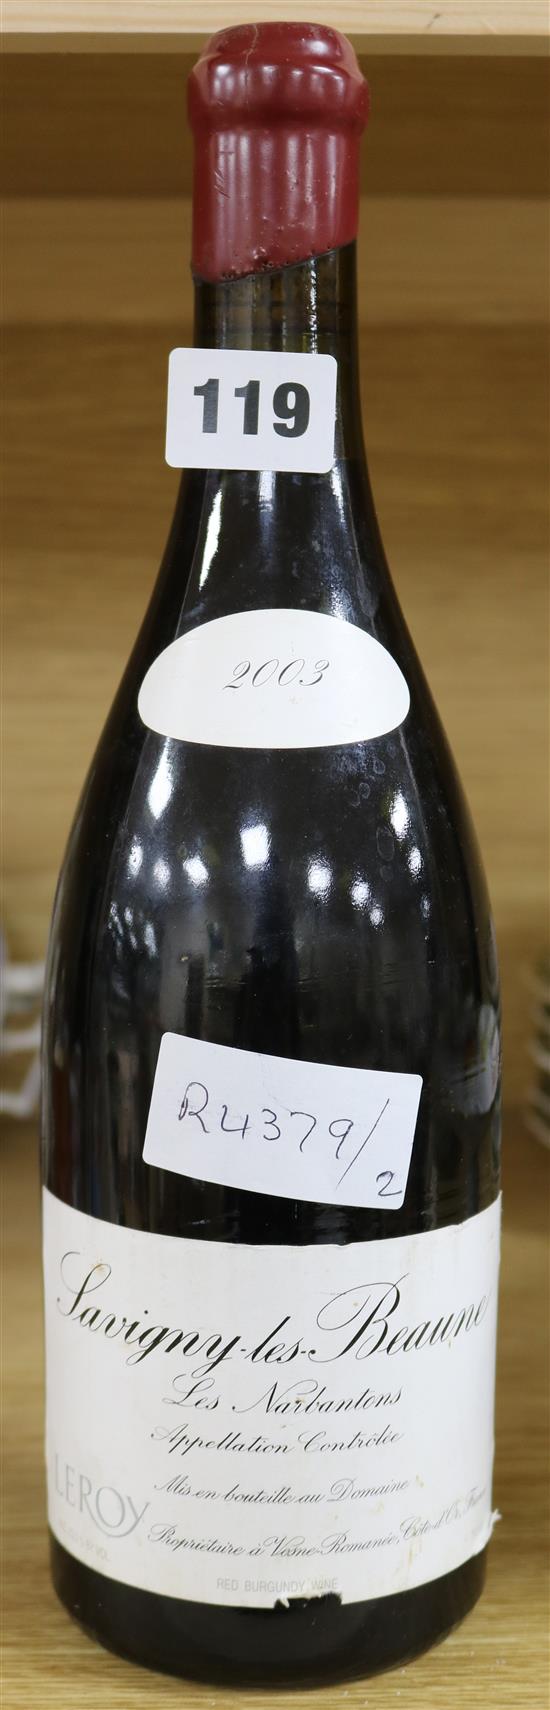 A bottle of 2003 Domaine Leroy Les Narbantons Savigny-Les Beaune.